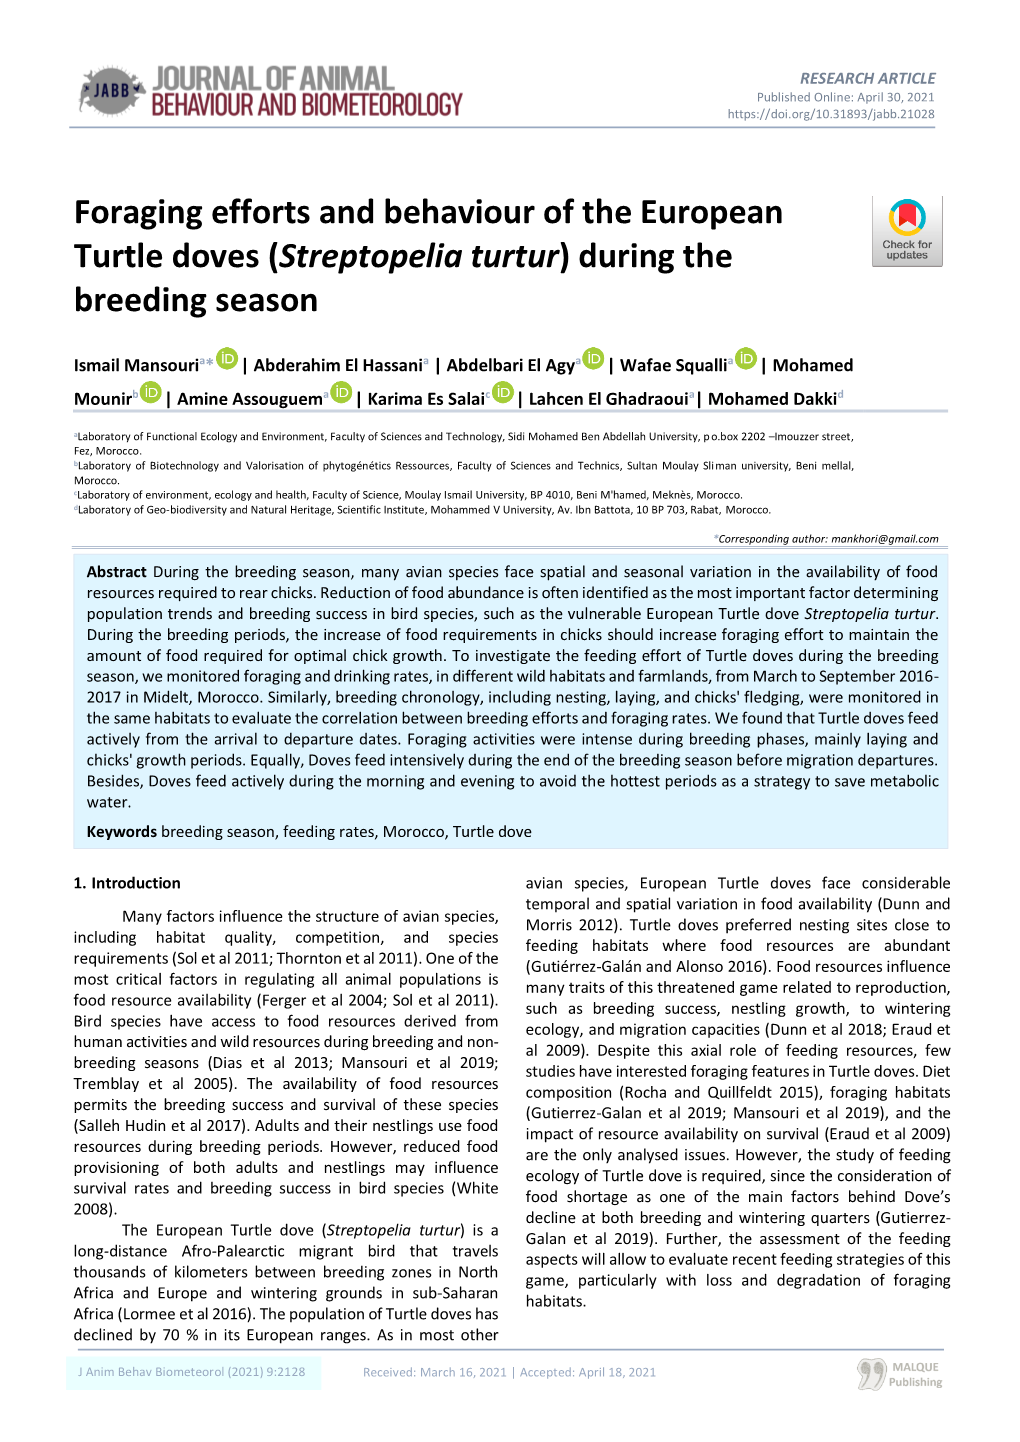 Foraging Efforts and Behaviour of the European Turtle Doves (Streptopelia Turtur) During the Breeding Season